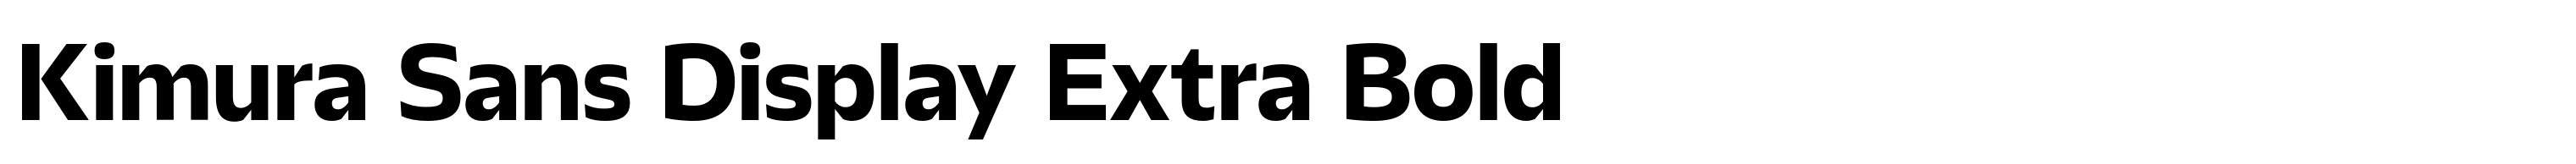 Kimura Sans Display Extra Bold